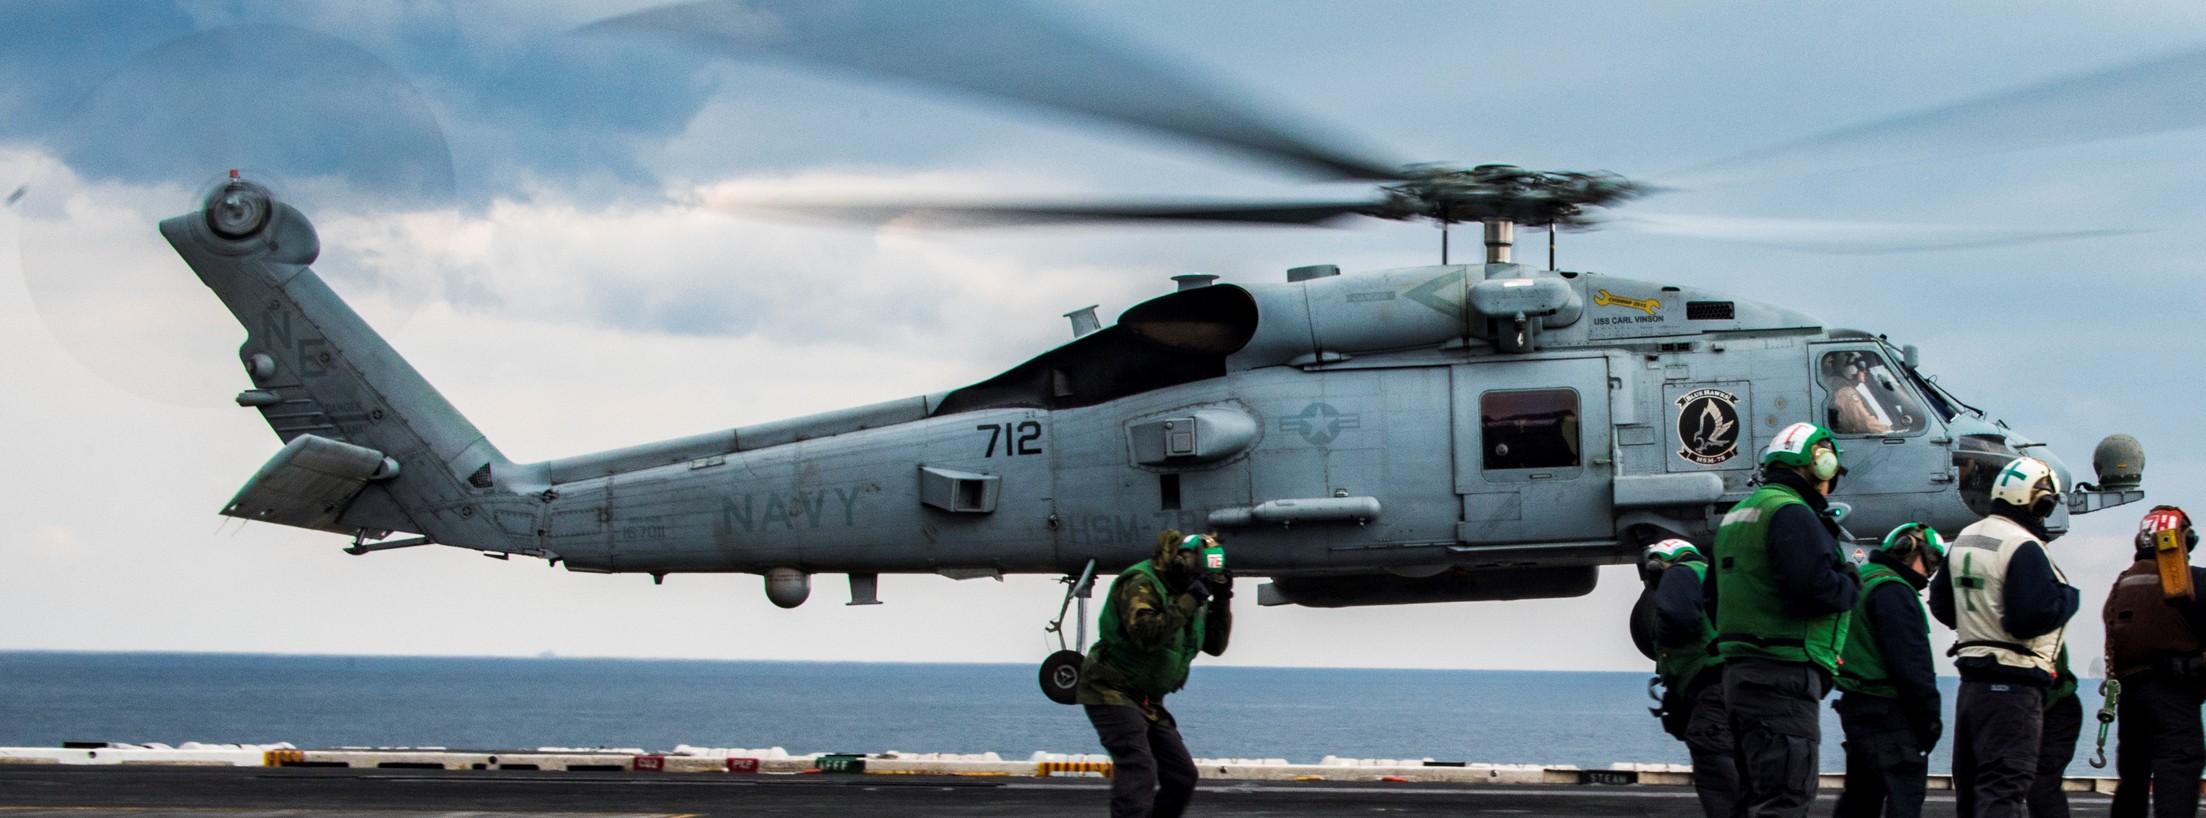 hsm-78 blue hawks helicopter maritime strike squadron mh-60r seahawk us navy 2017 08 carrier air wing cvw-2 uss carl vinson cvn-70